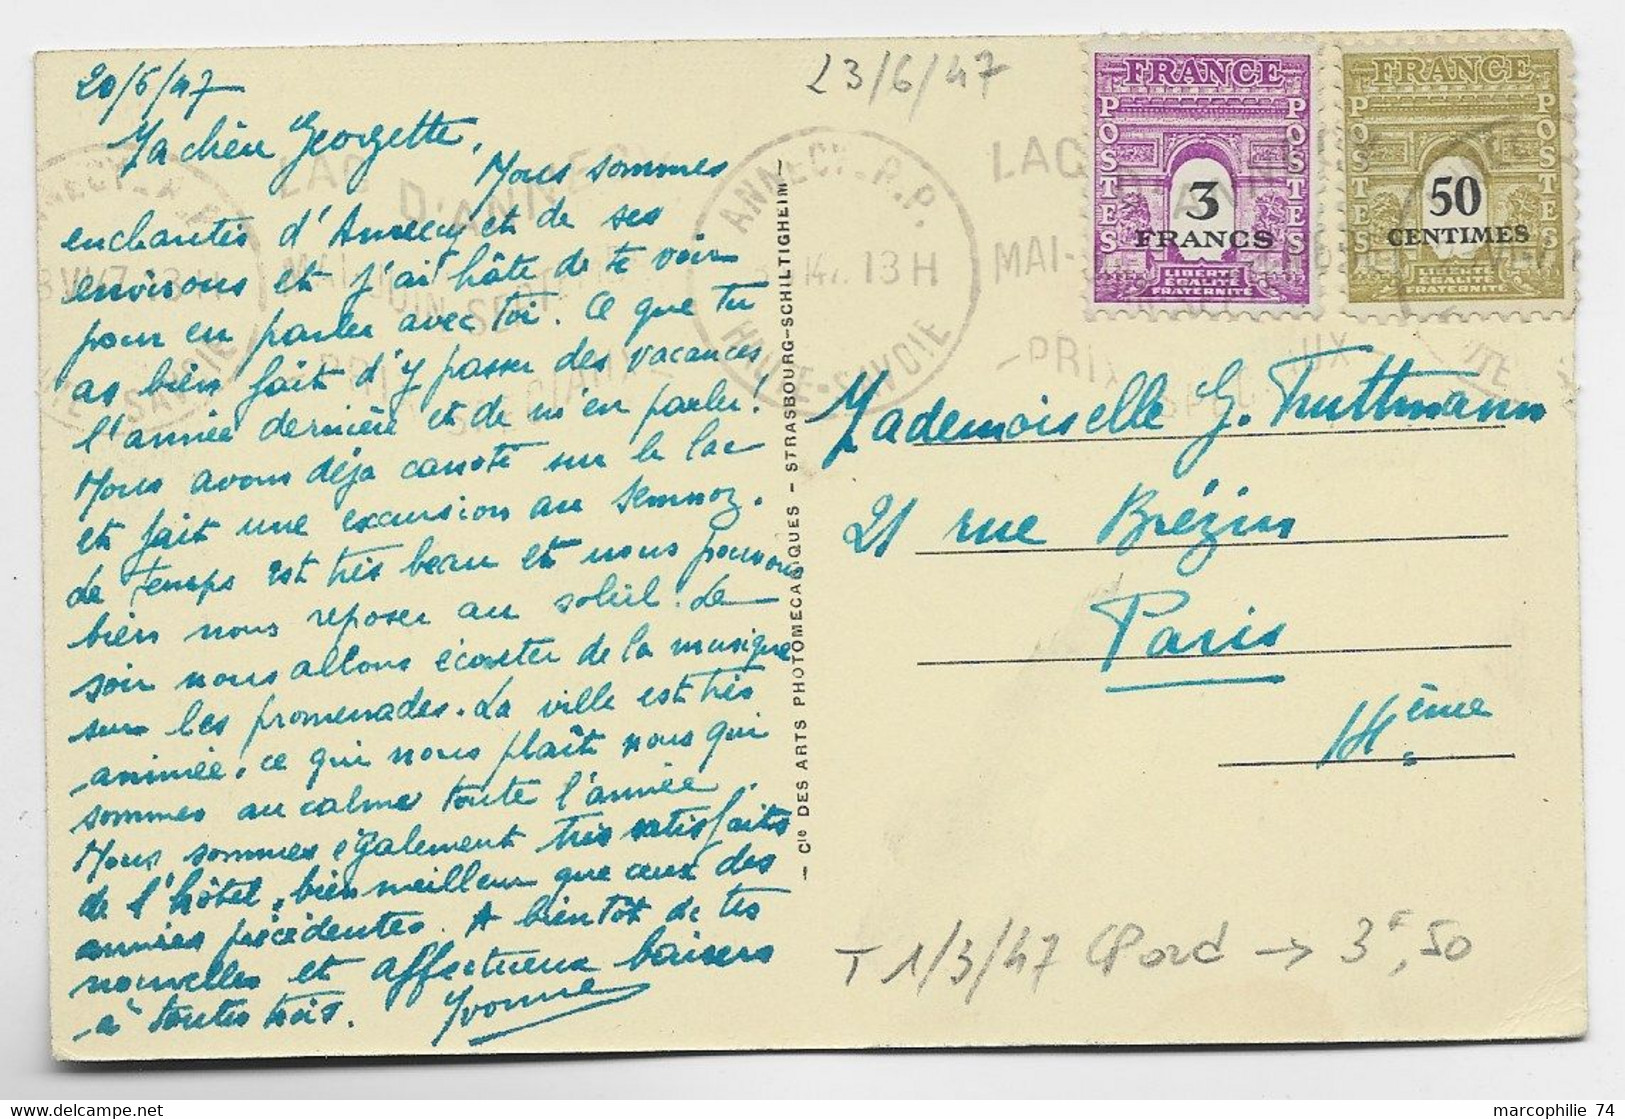 ARC TRIOMPHE 3FR+50C CARTE ANNECY RP 23.VI.1947 AU TARIF - 1944-45 Arc Of Triomphe